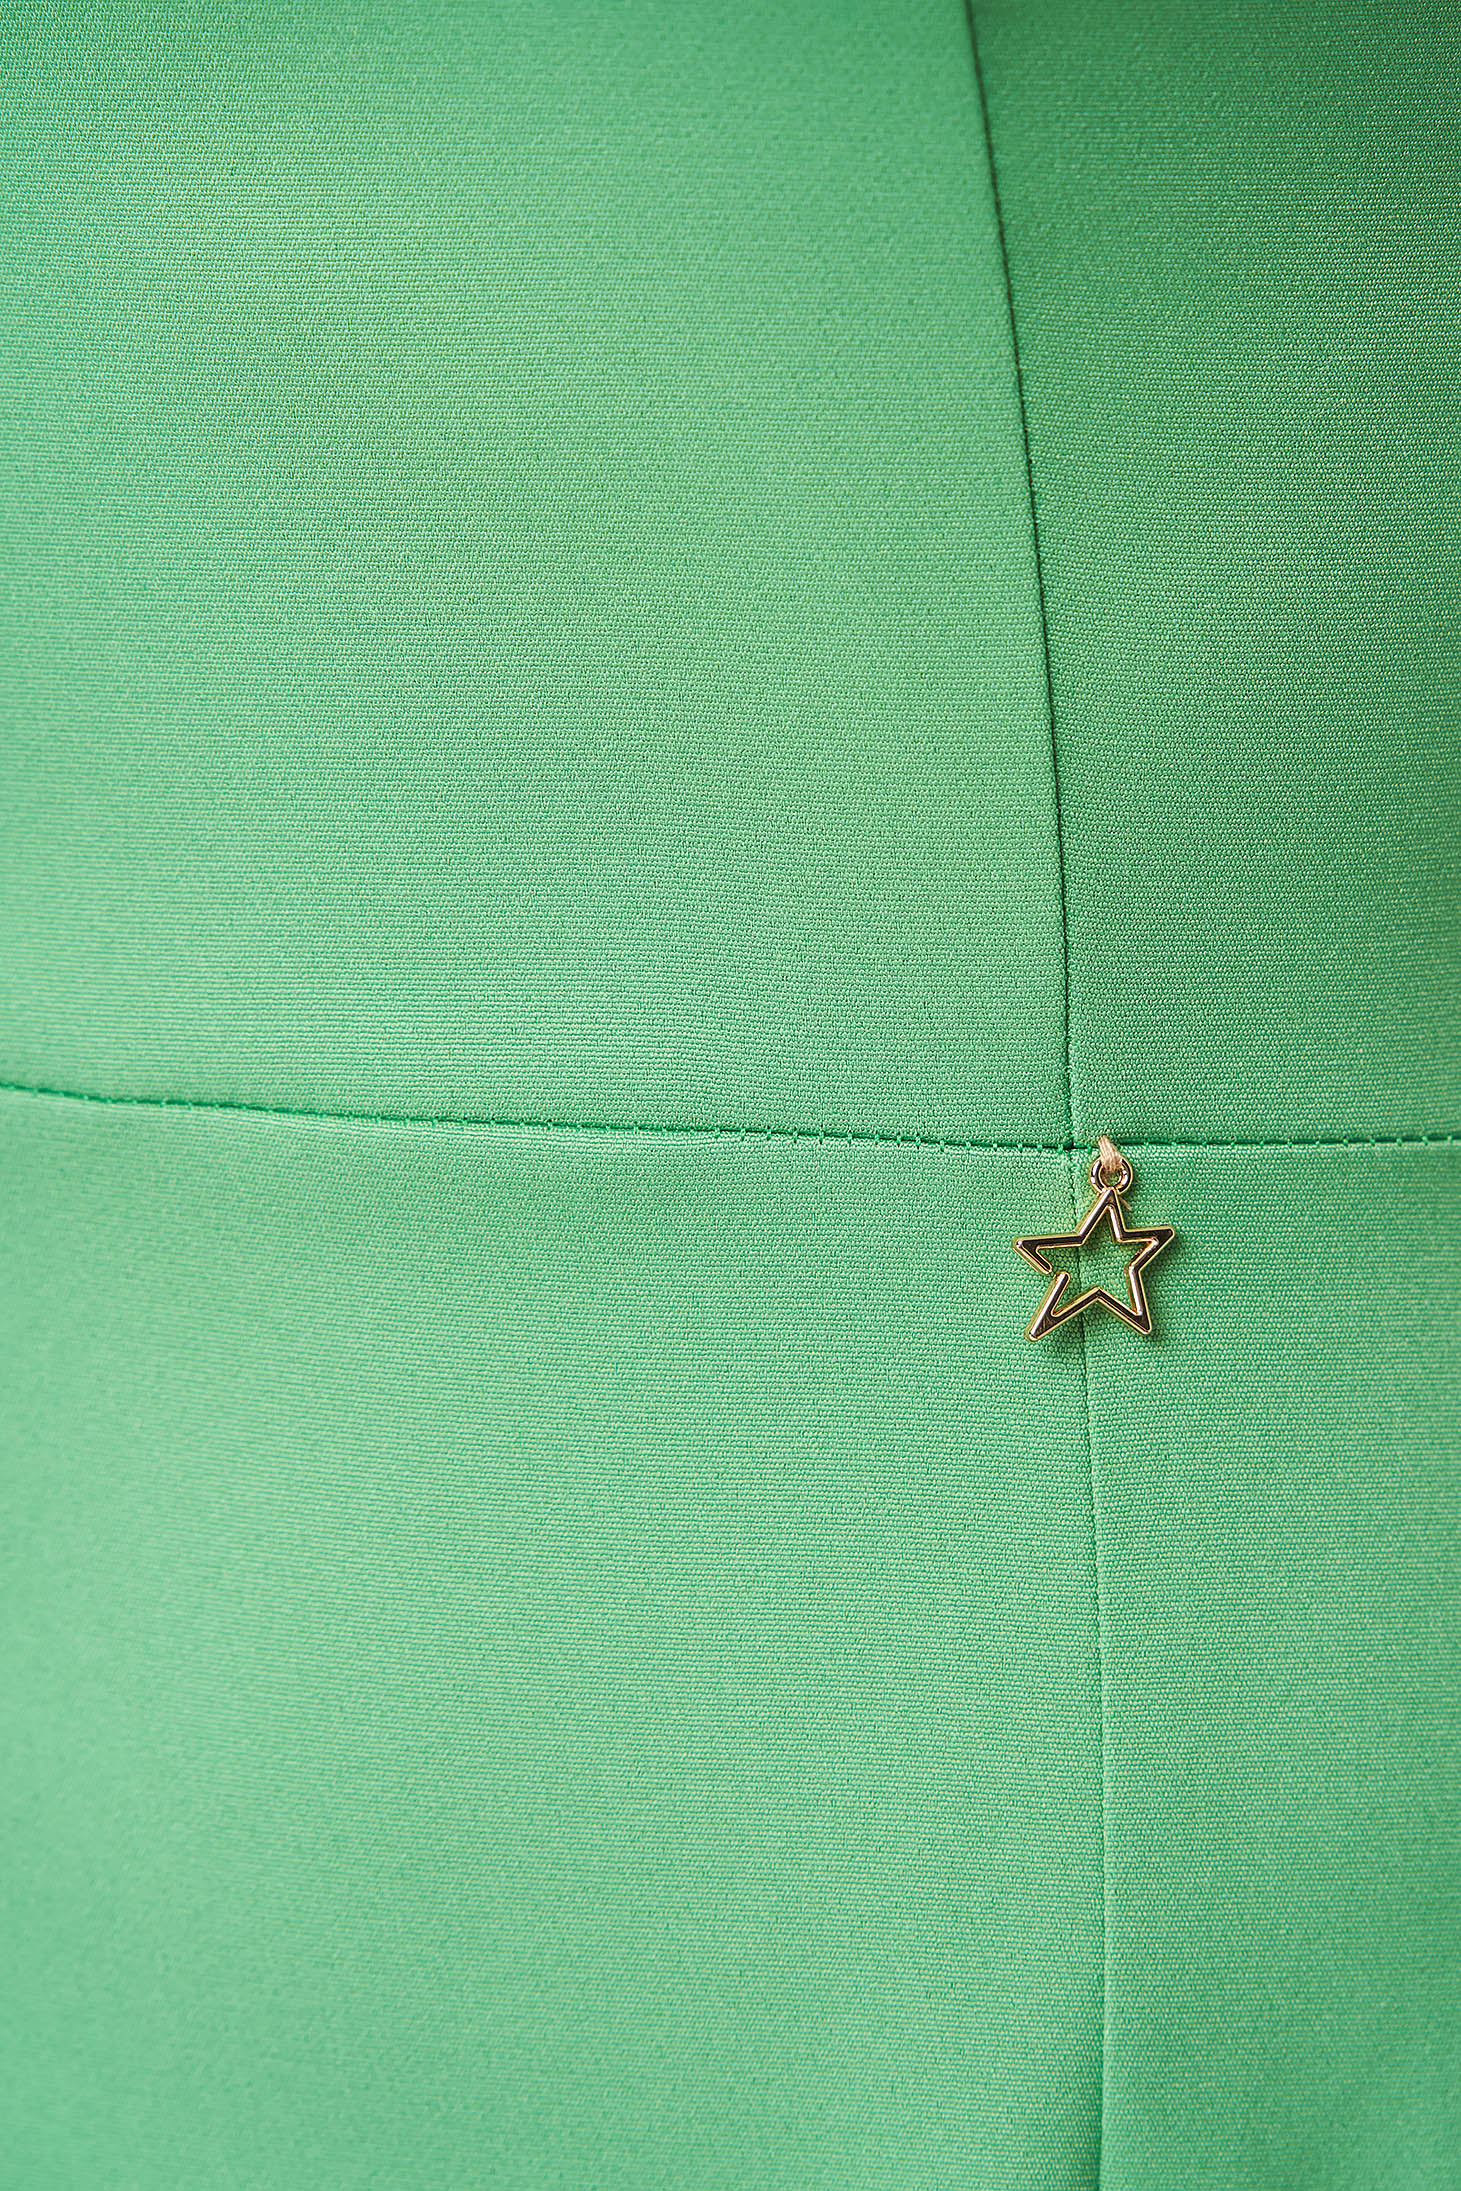 Rochie din stofa usor elastica verde-deschis tip creion fara maneci - StarShinerS 5 - StarShinerS.ro